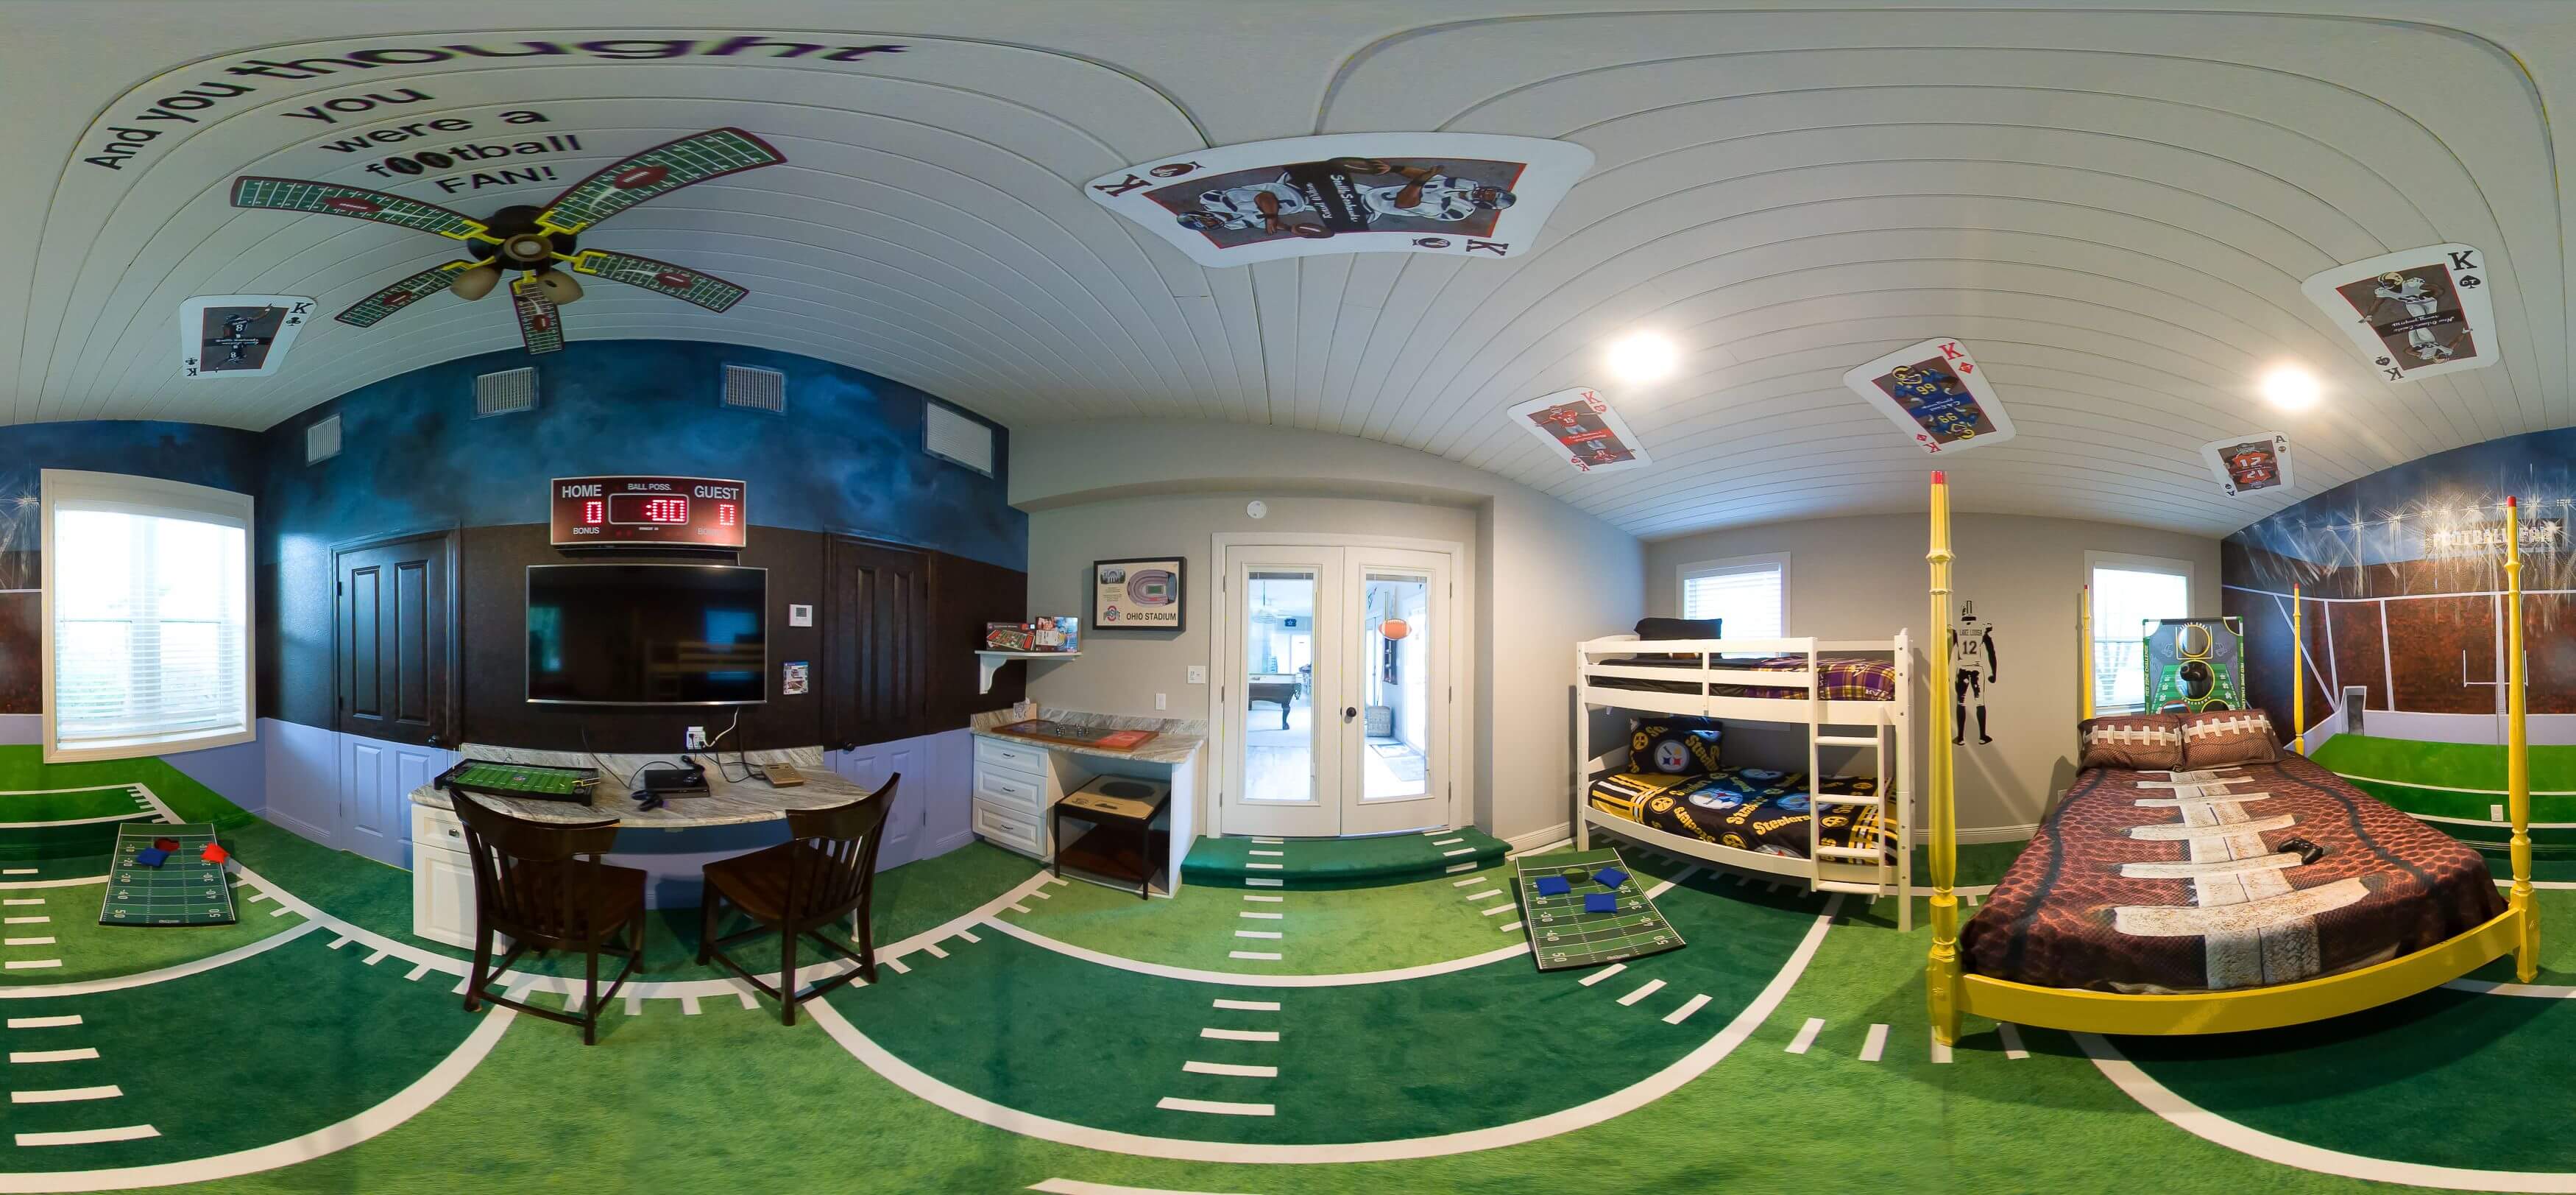 Football bedroom with football carpet